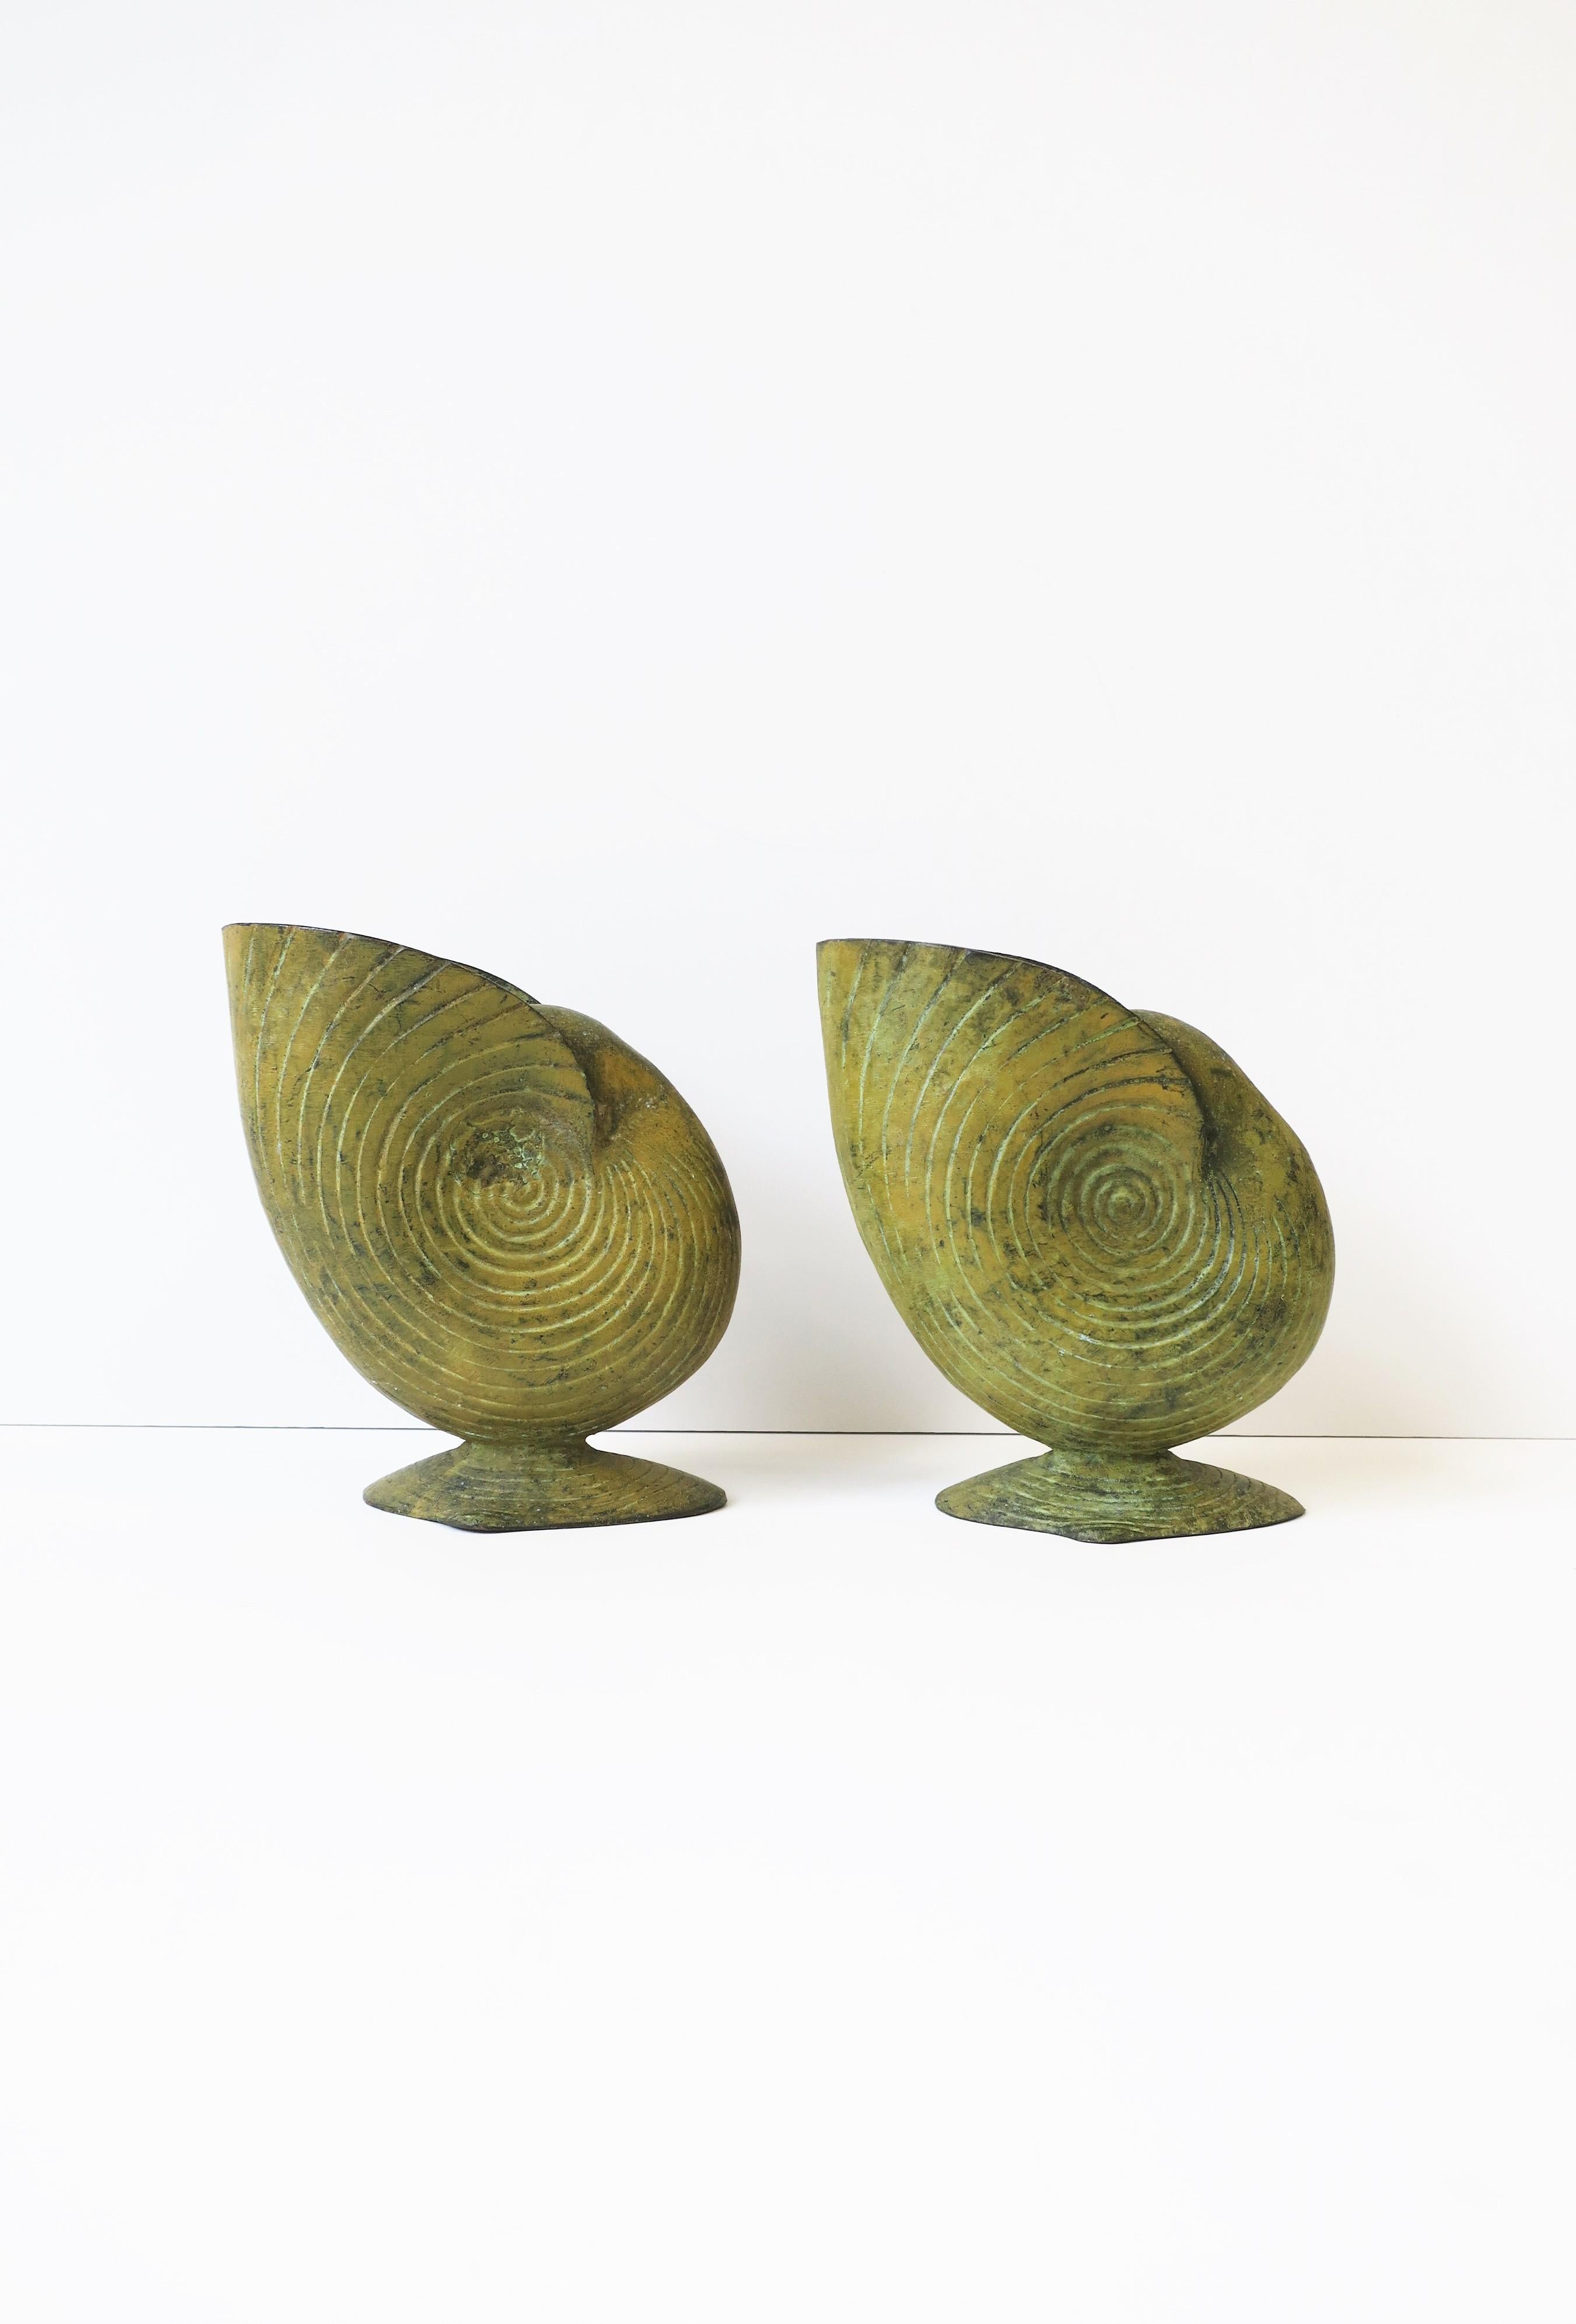 Metal Nautilus Seashell Vases with Yellow Hue, Pair 6